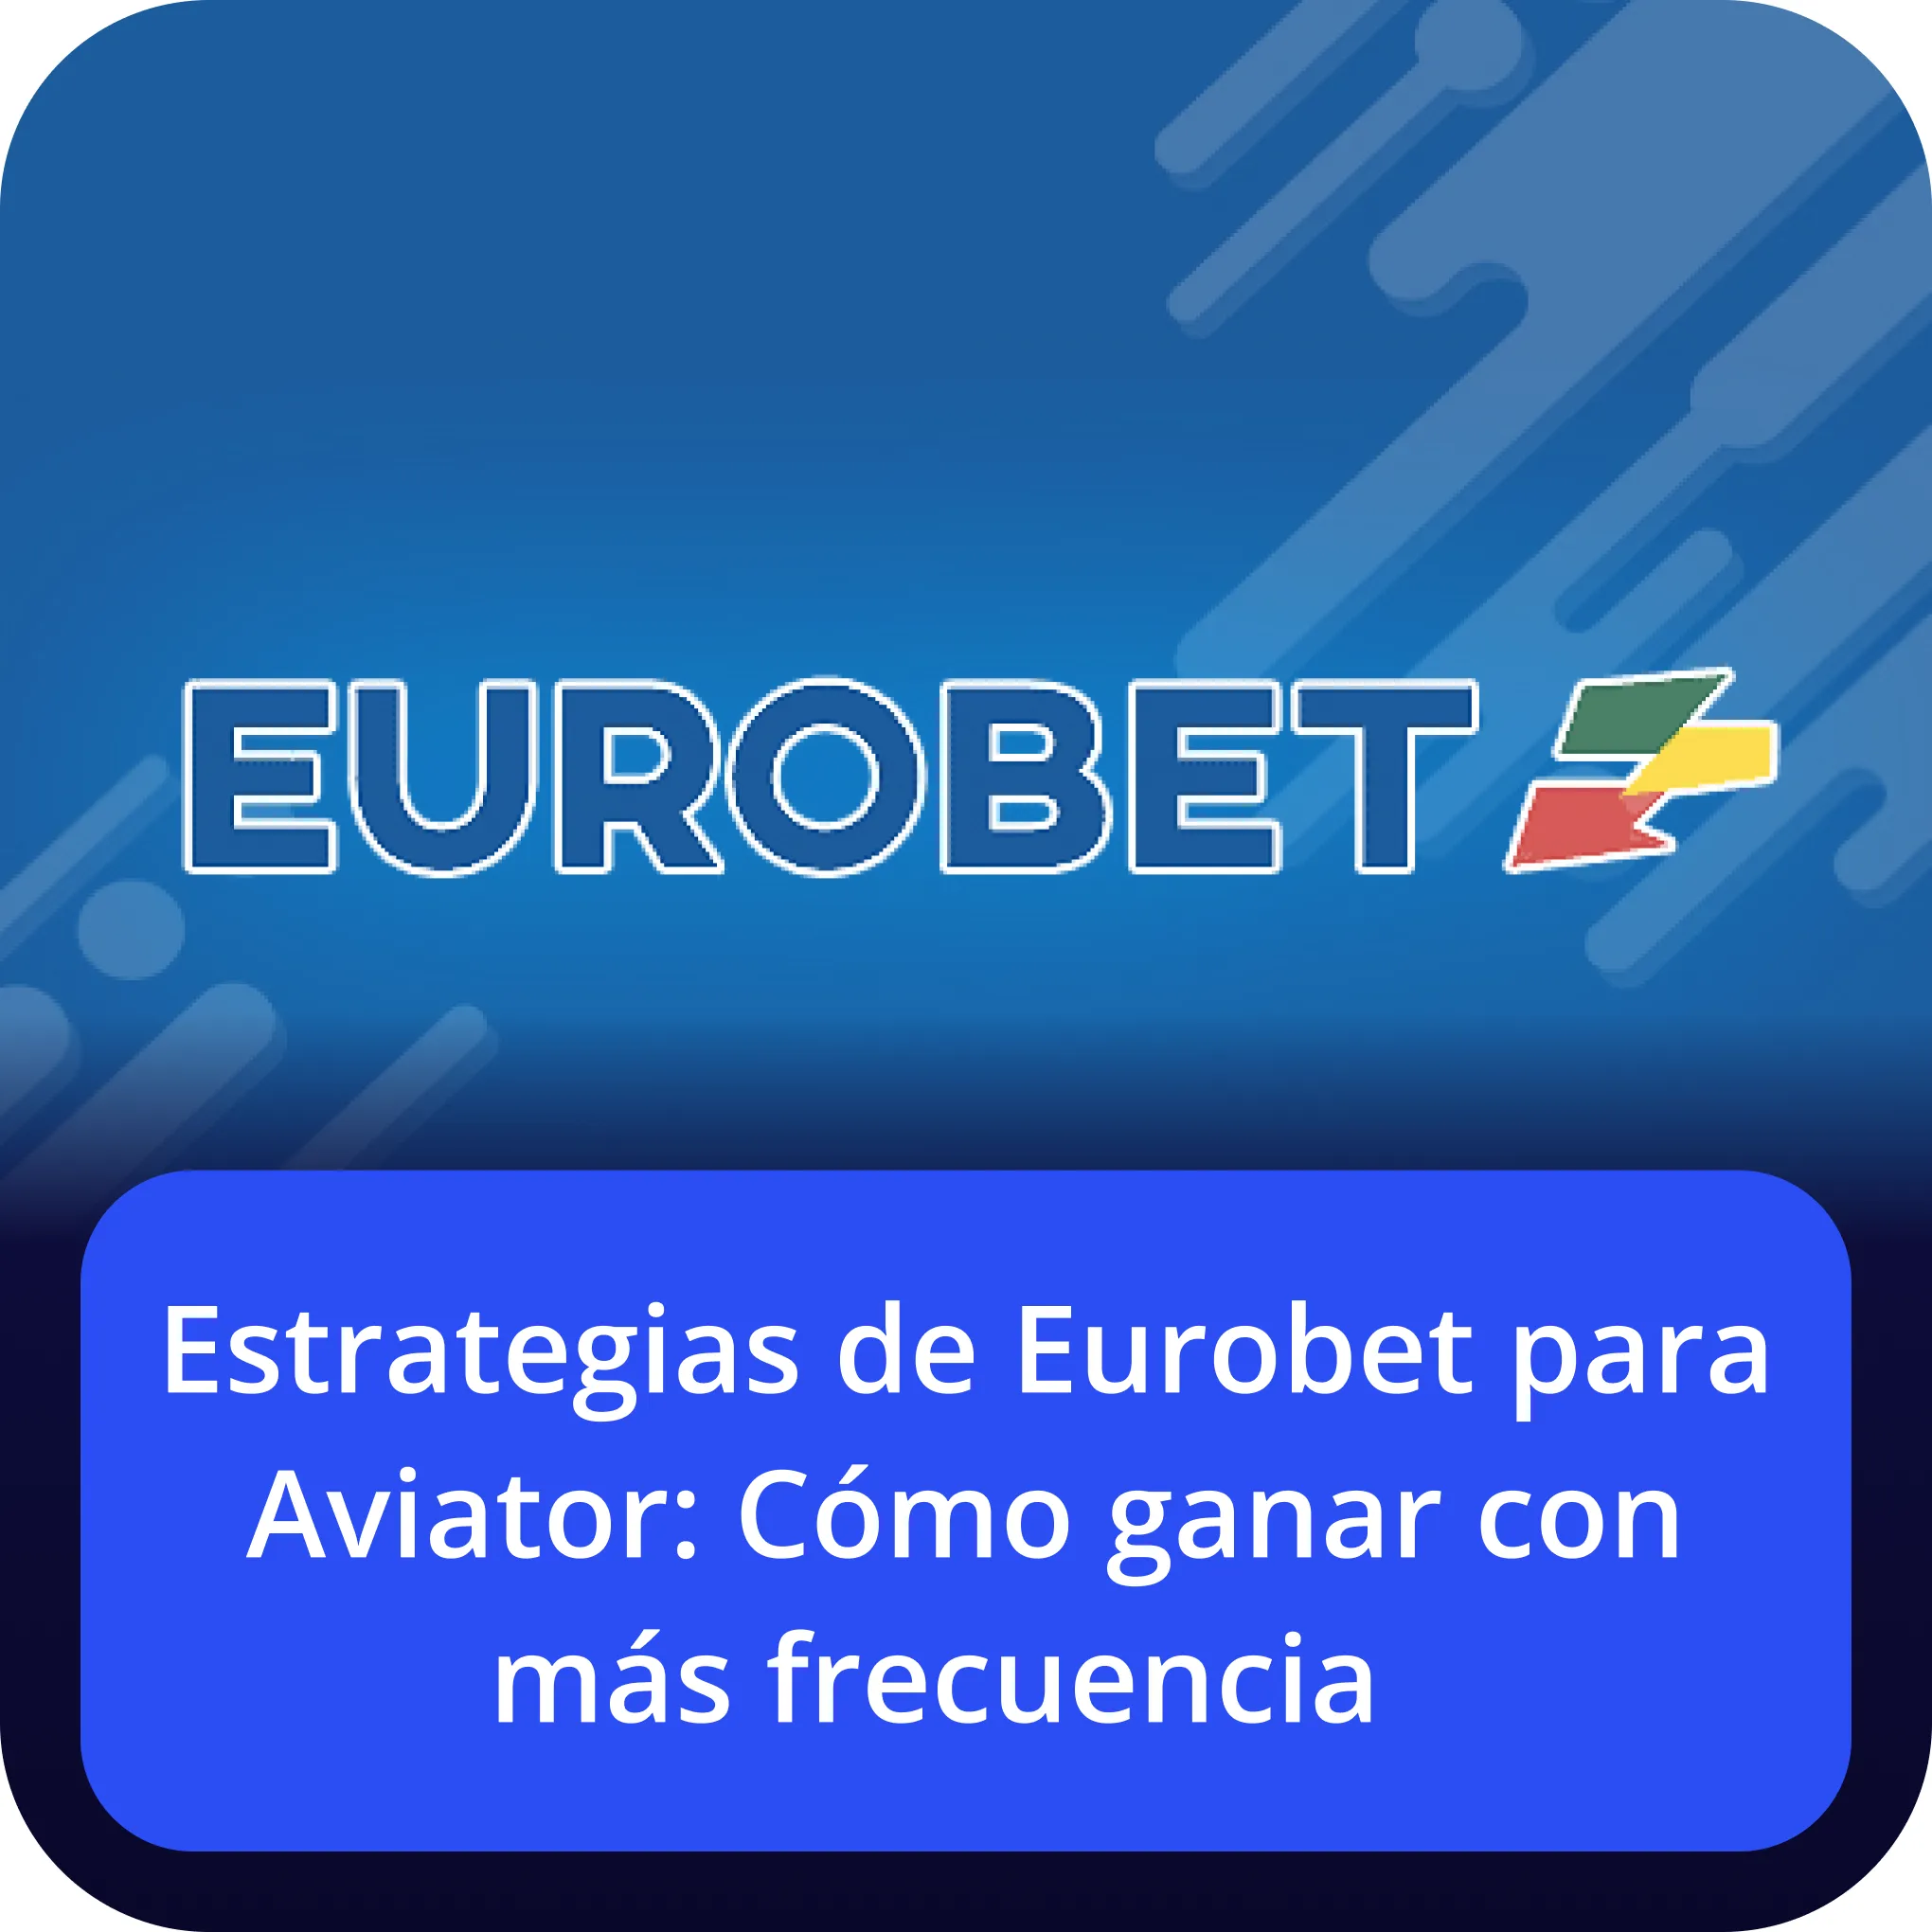 eurobet aviator estrategias